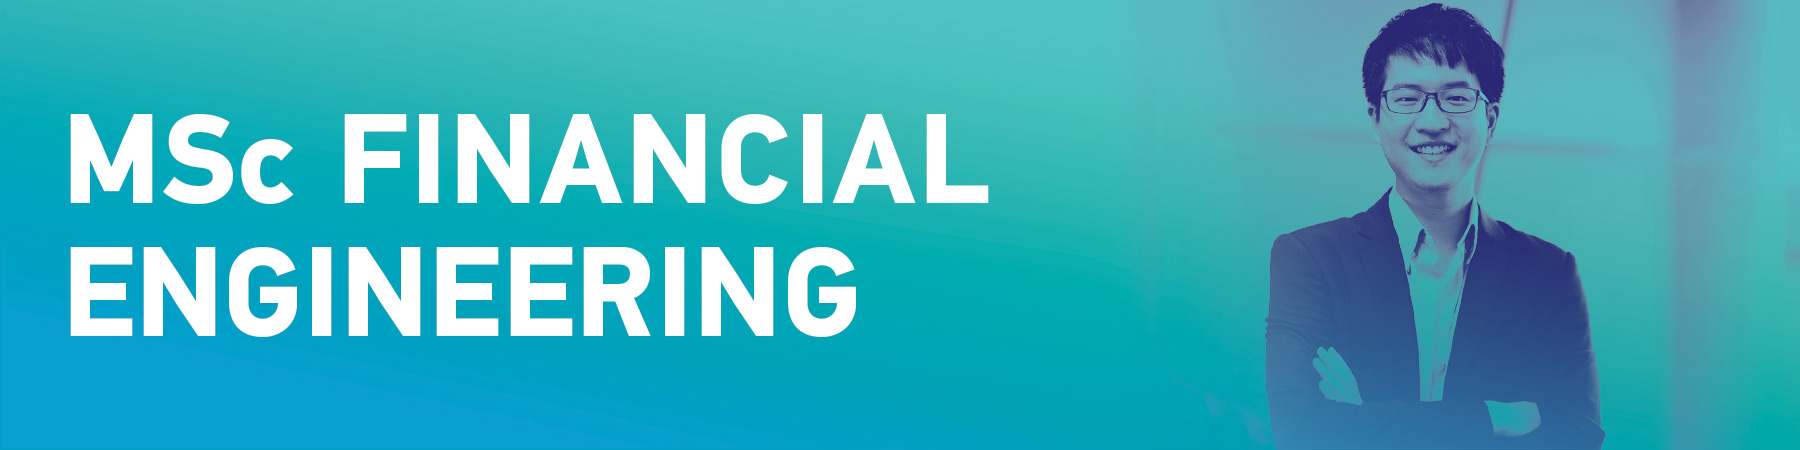 MSc Financial Engineering Brochure Download